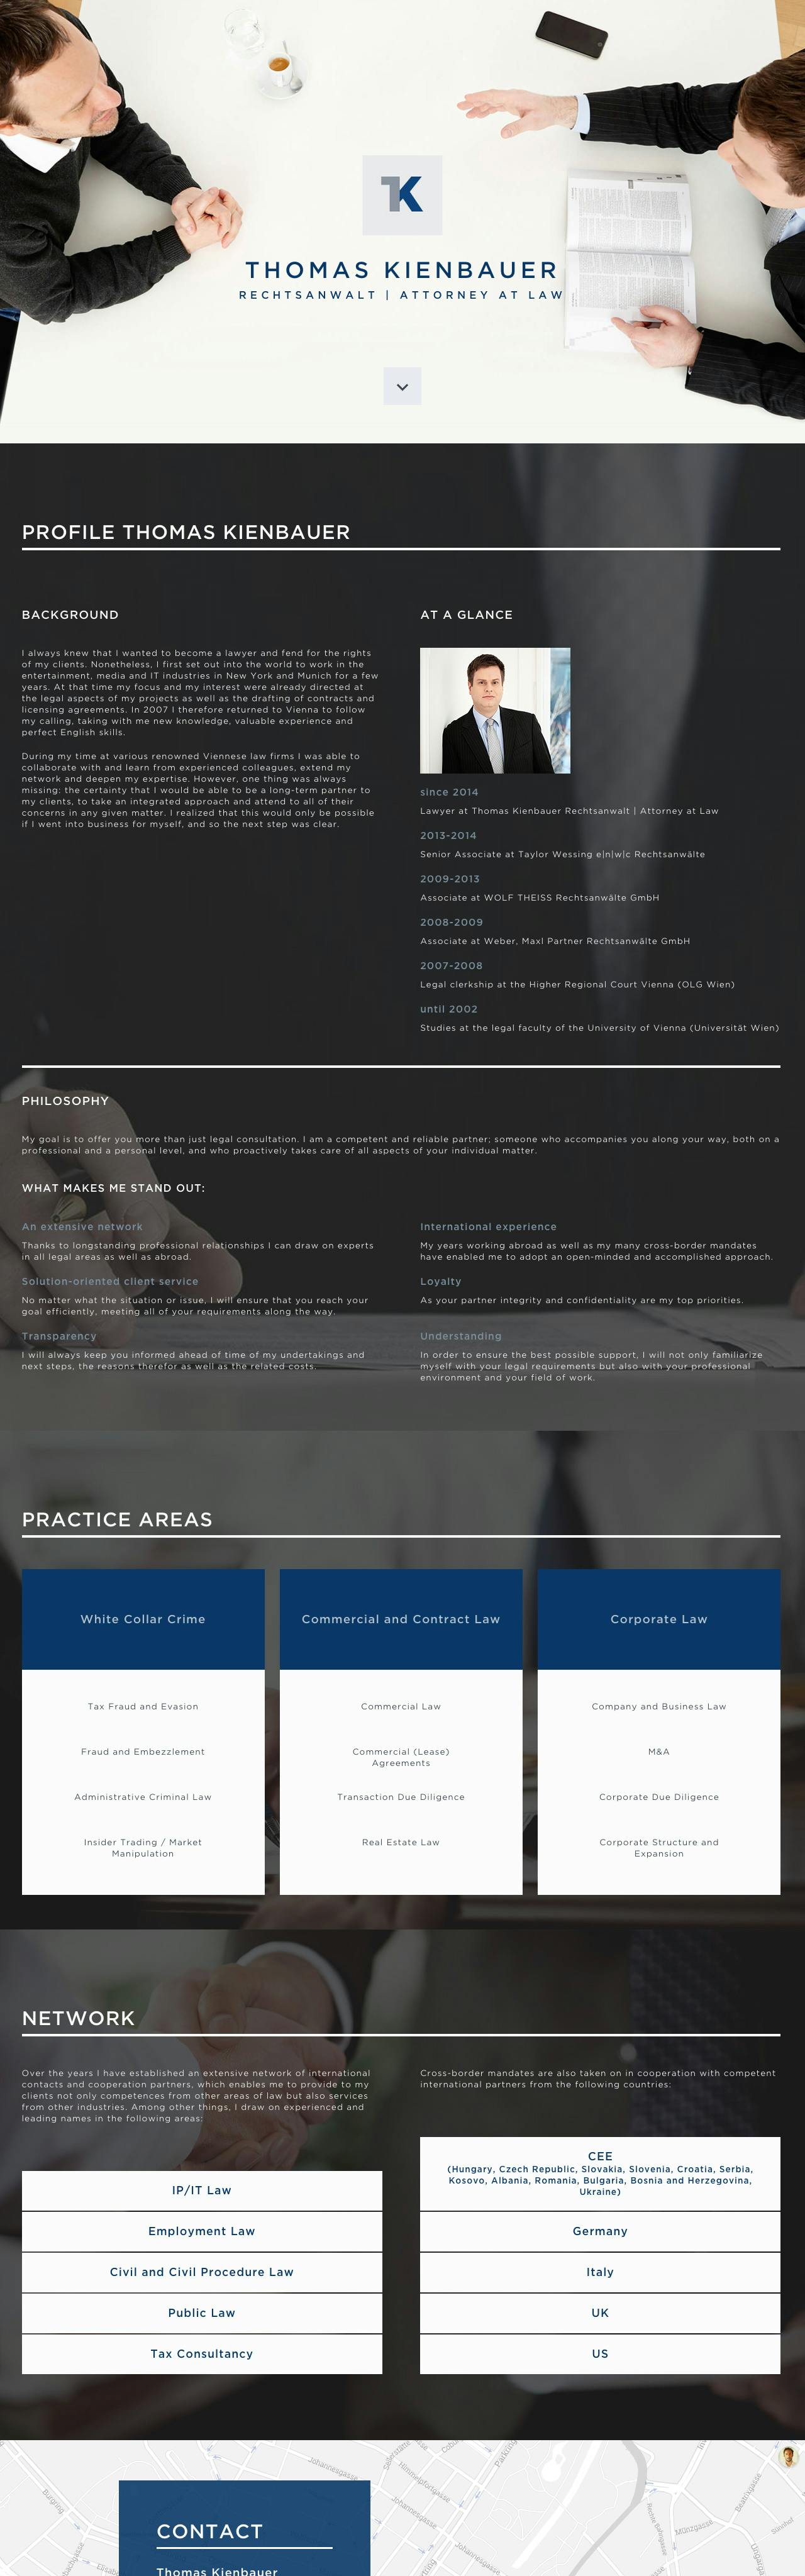 Kienbauer-Law Website Screenshot